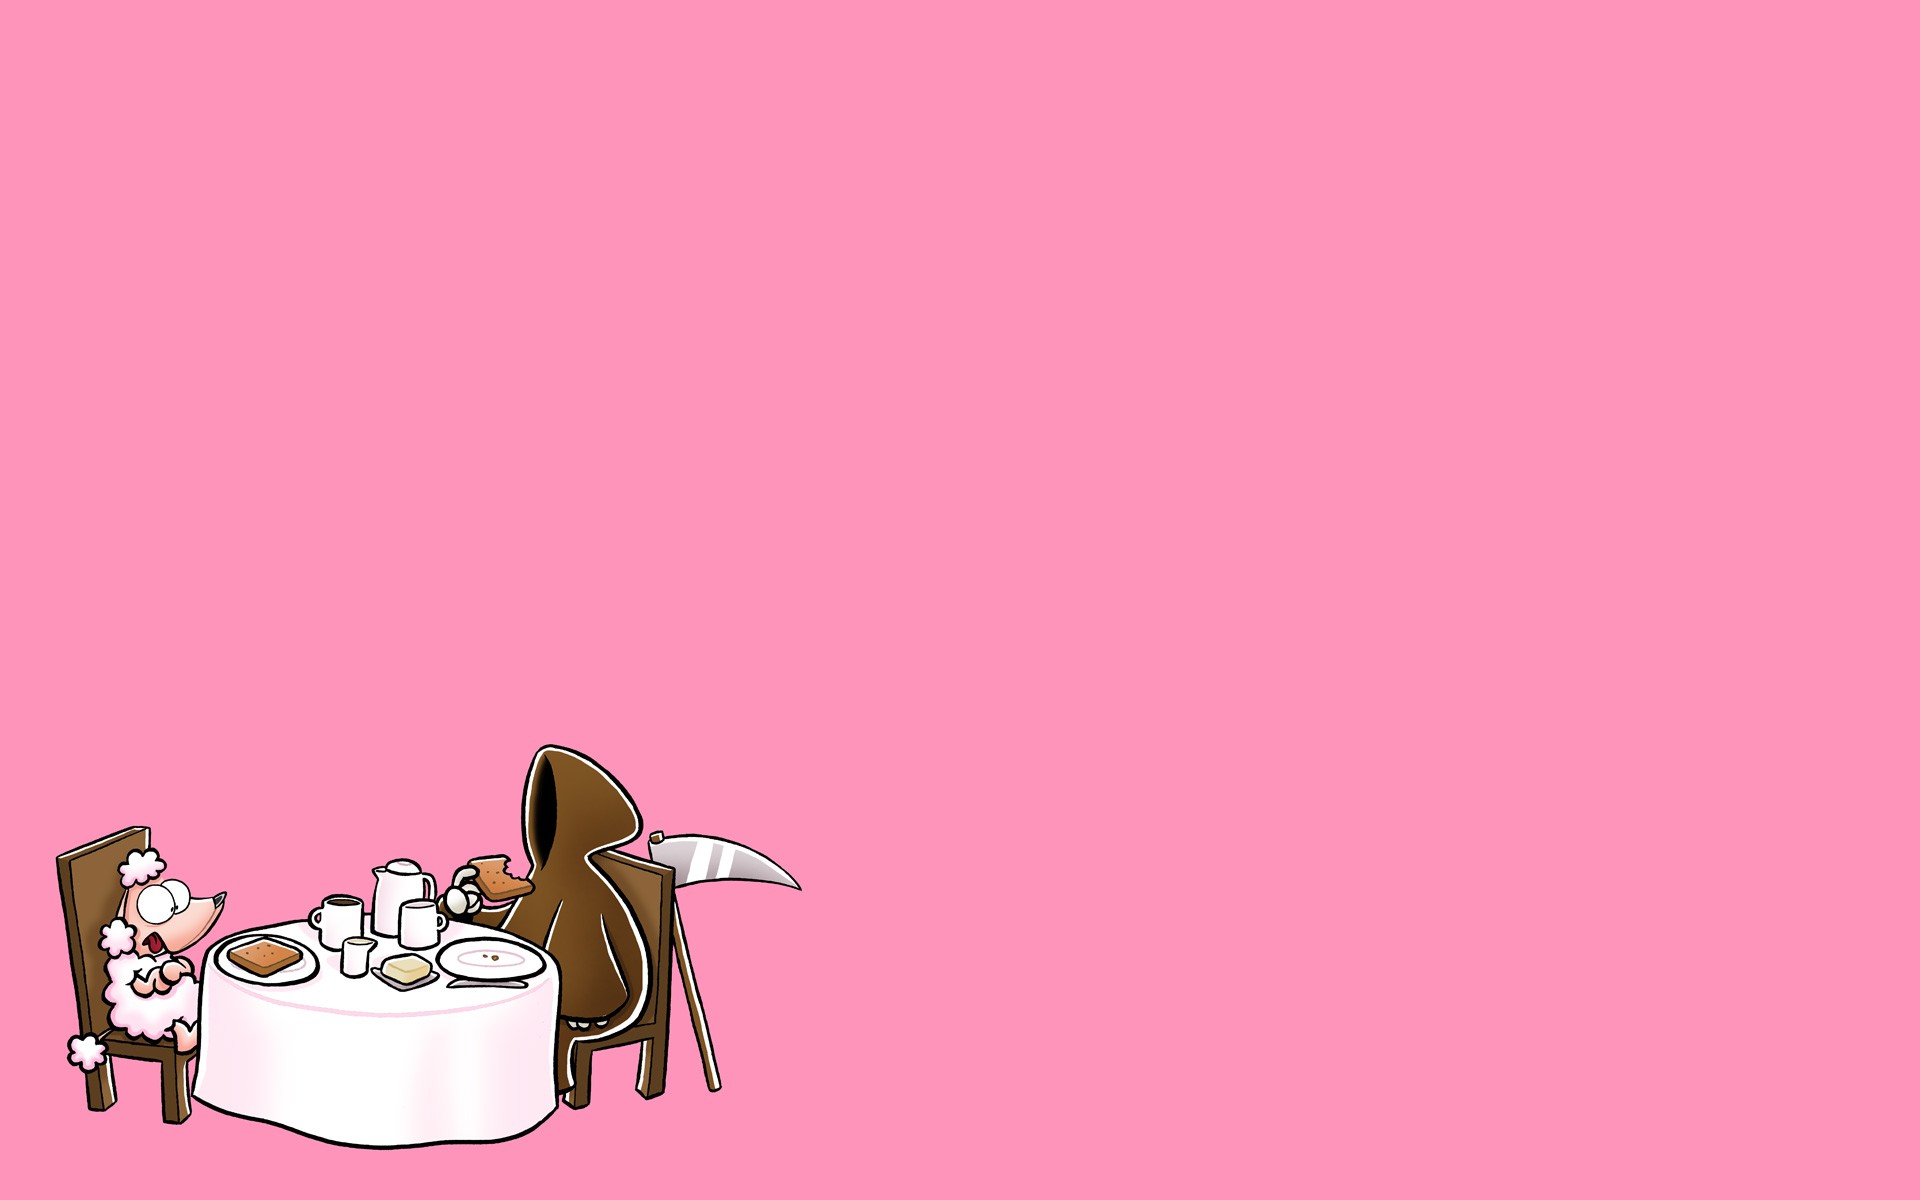 General 1920x1200 cartoon death minimalism humor food pink background simple background scythe eating